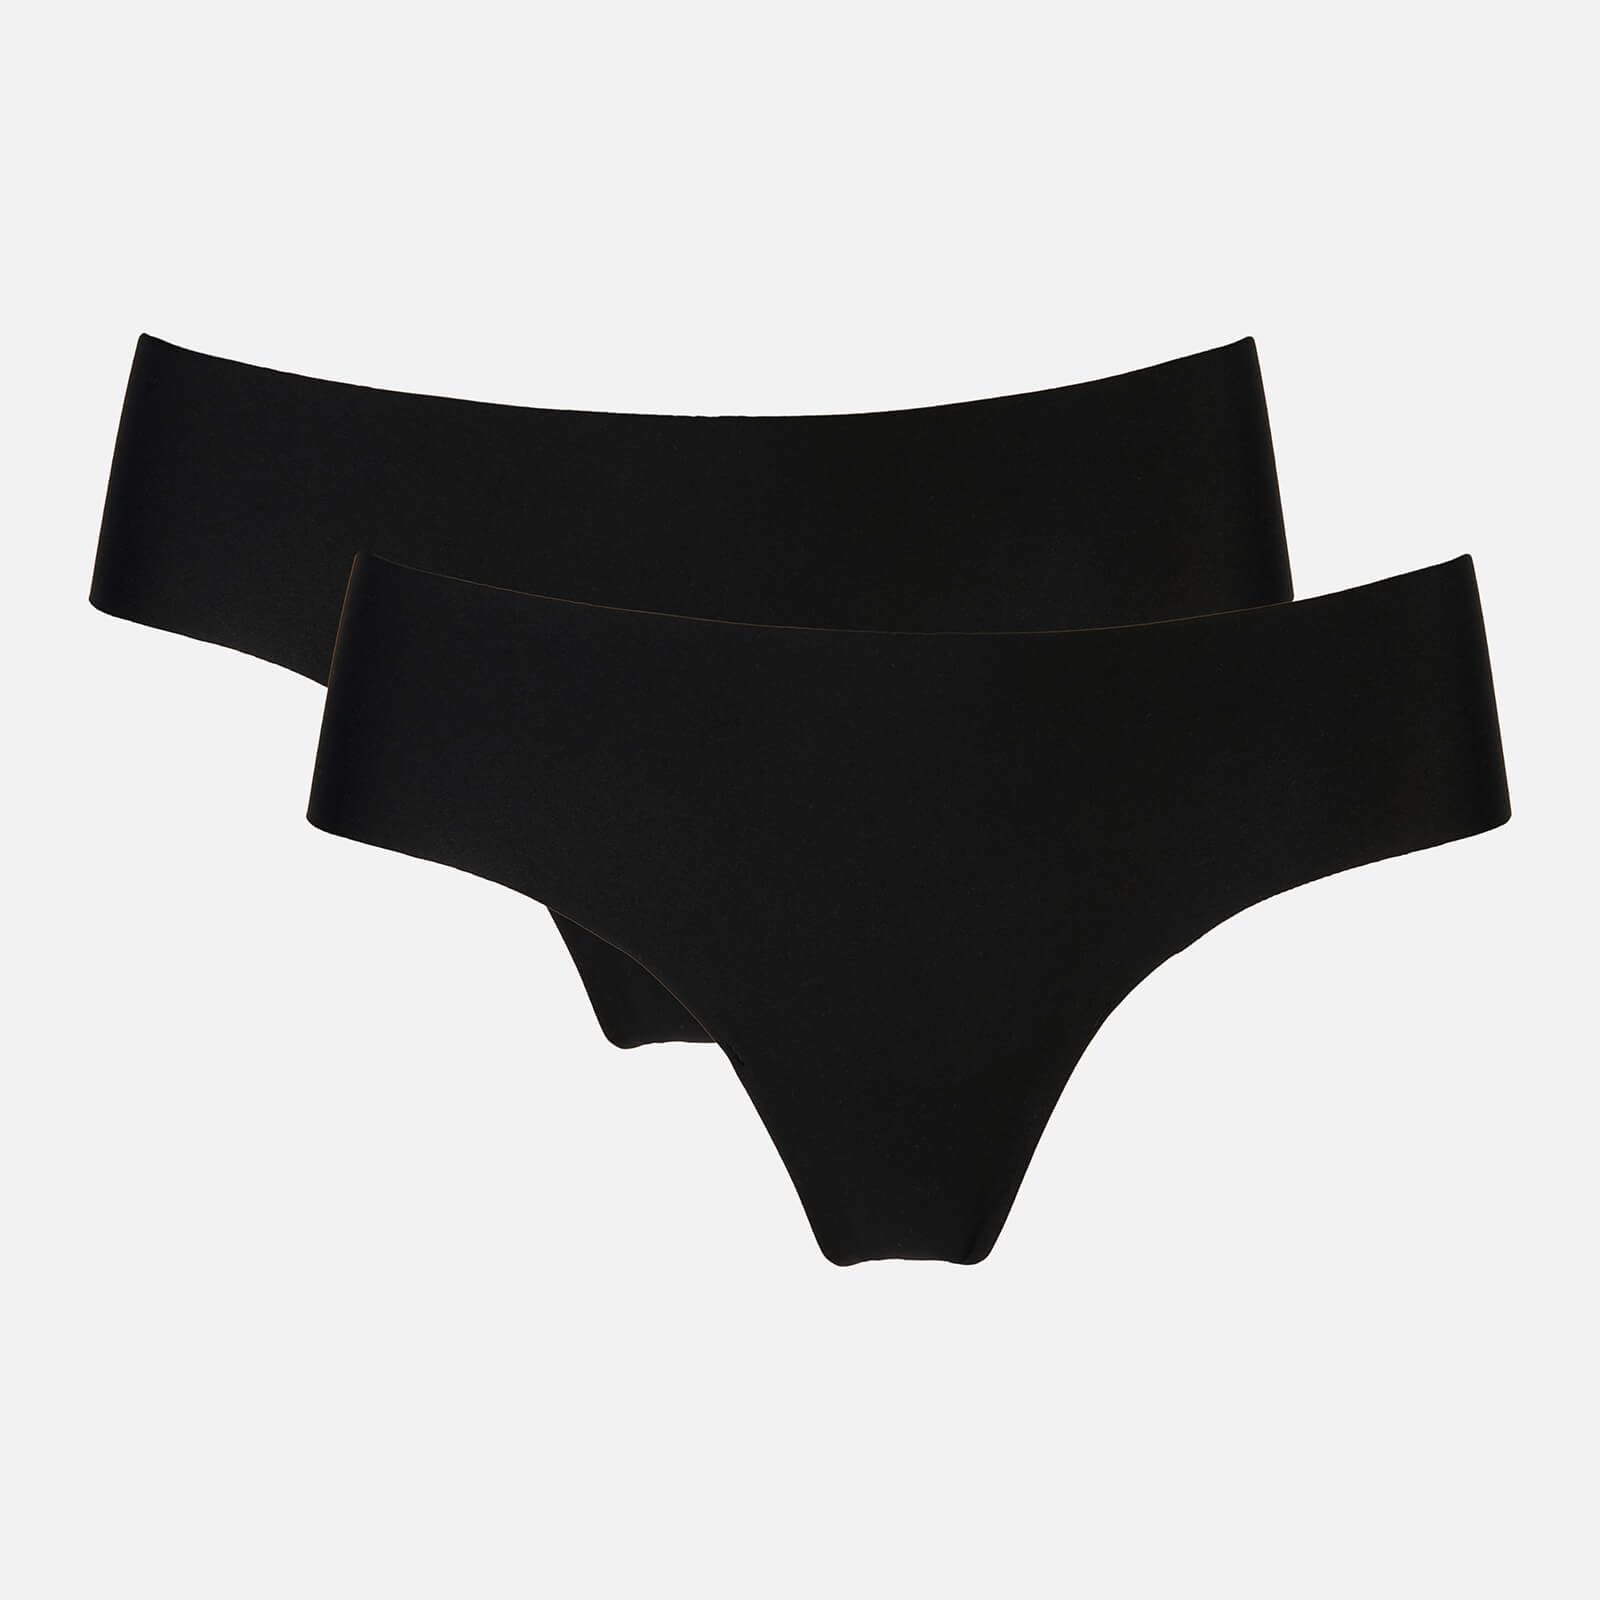 Organic Basics Women's Invisible Cheeky Thong 2-Pack - Black - XL